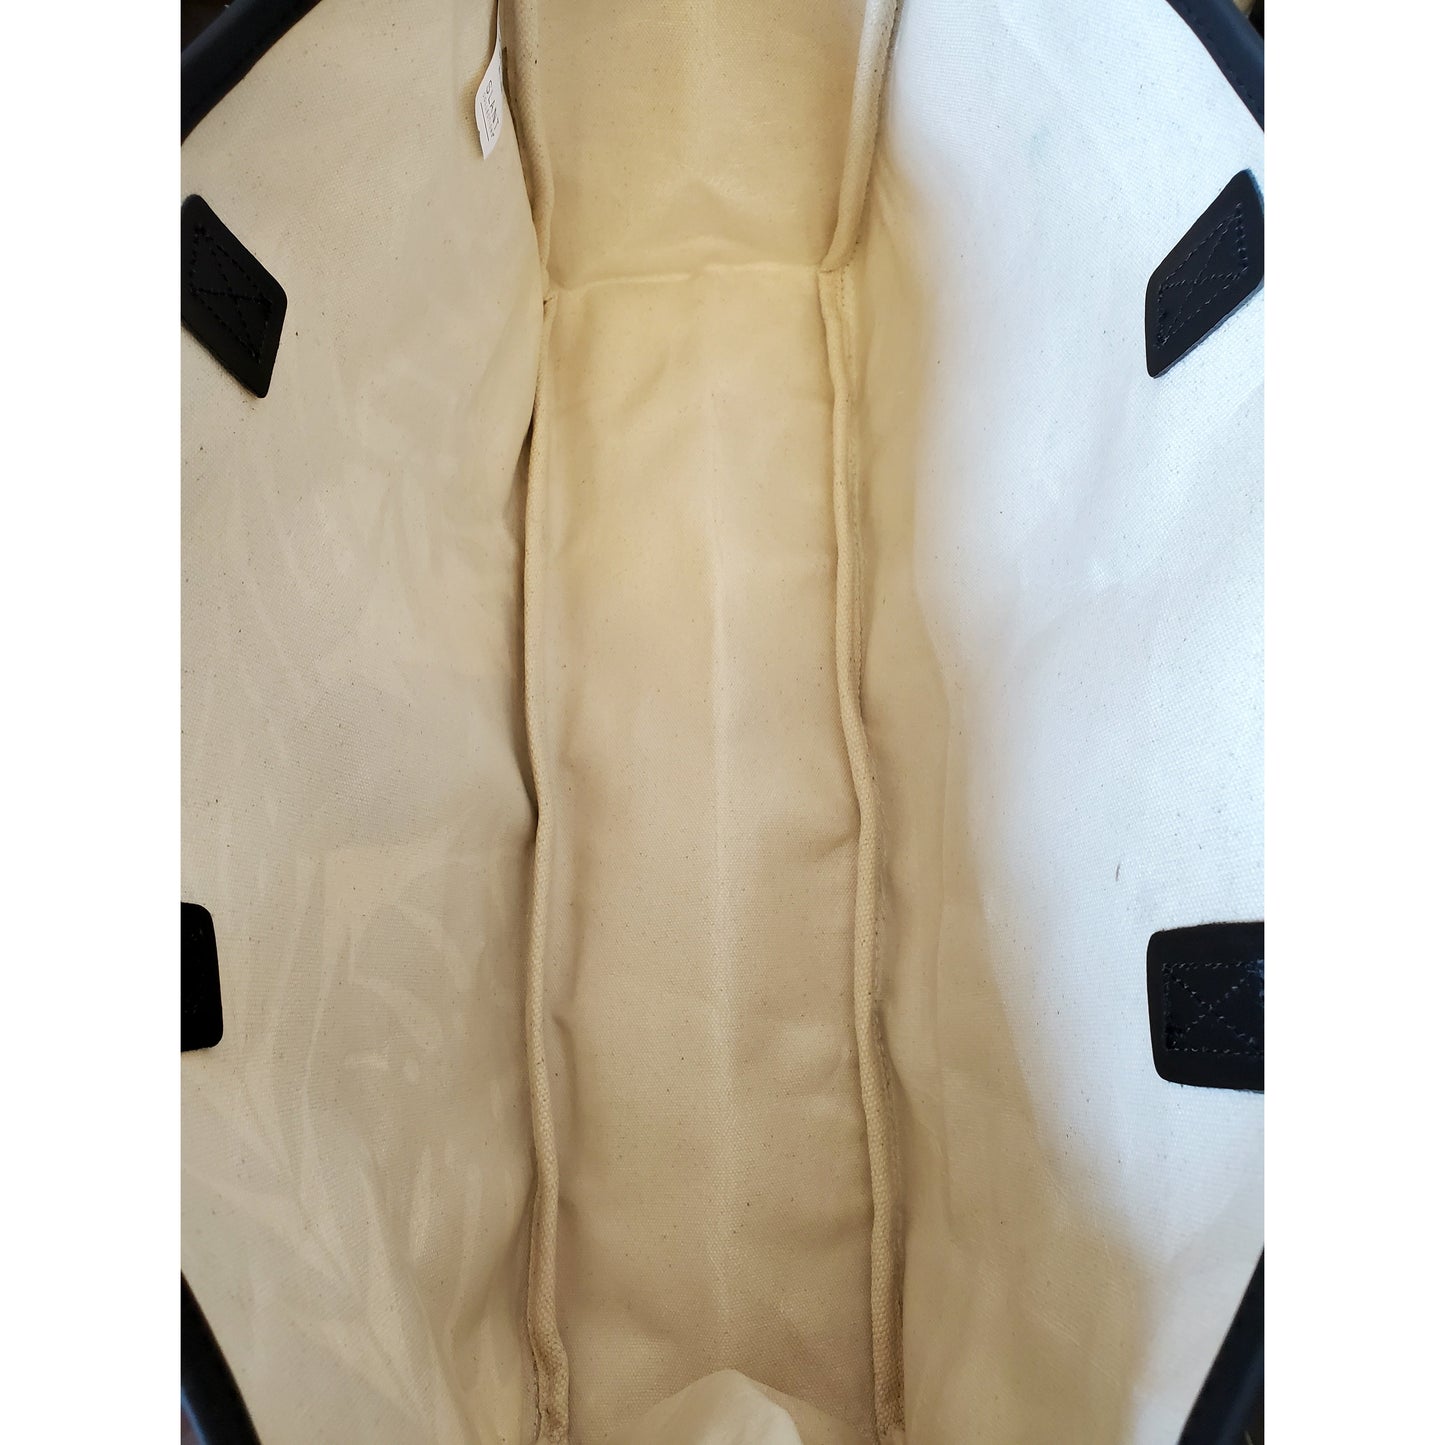 Brunch Club Canvas Large Rectangular Tote Bag | Genuine Leather Handles